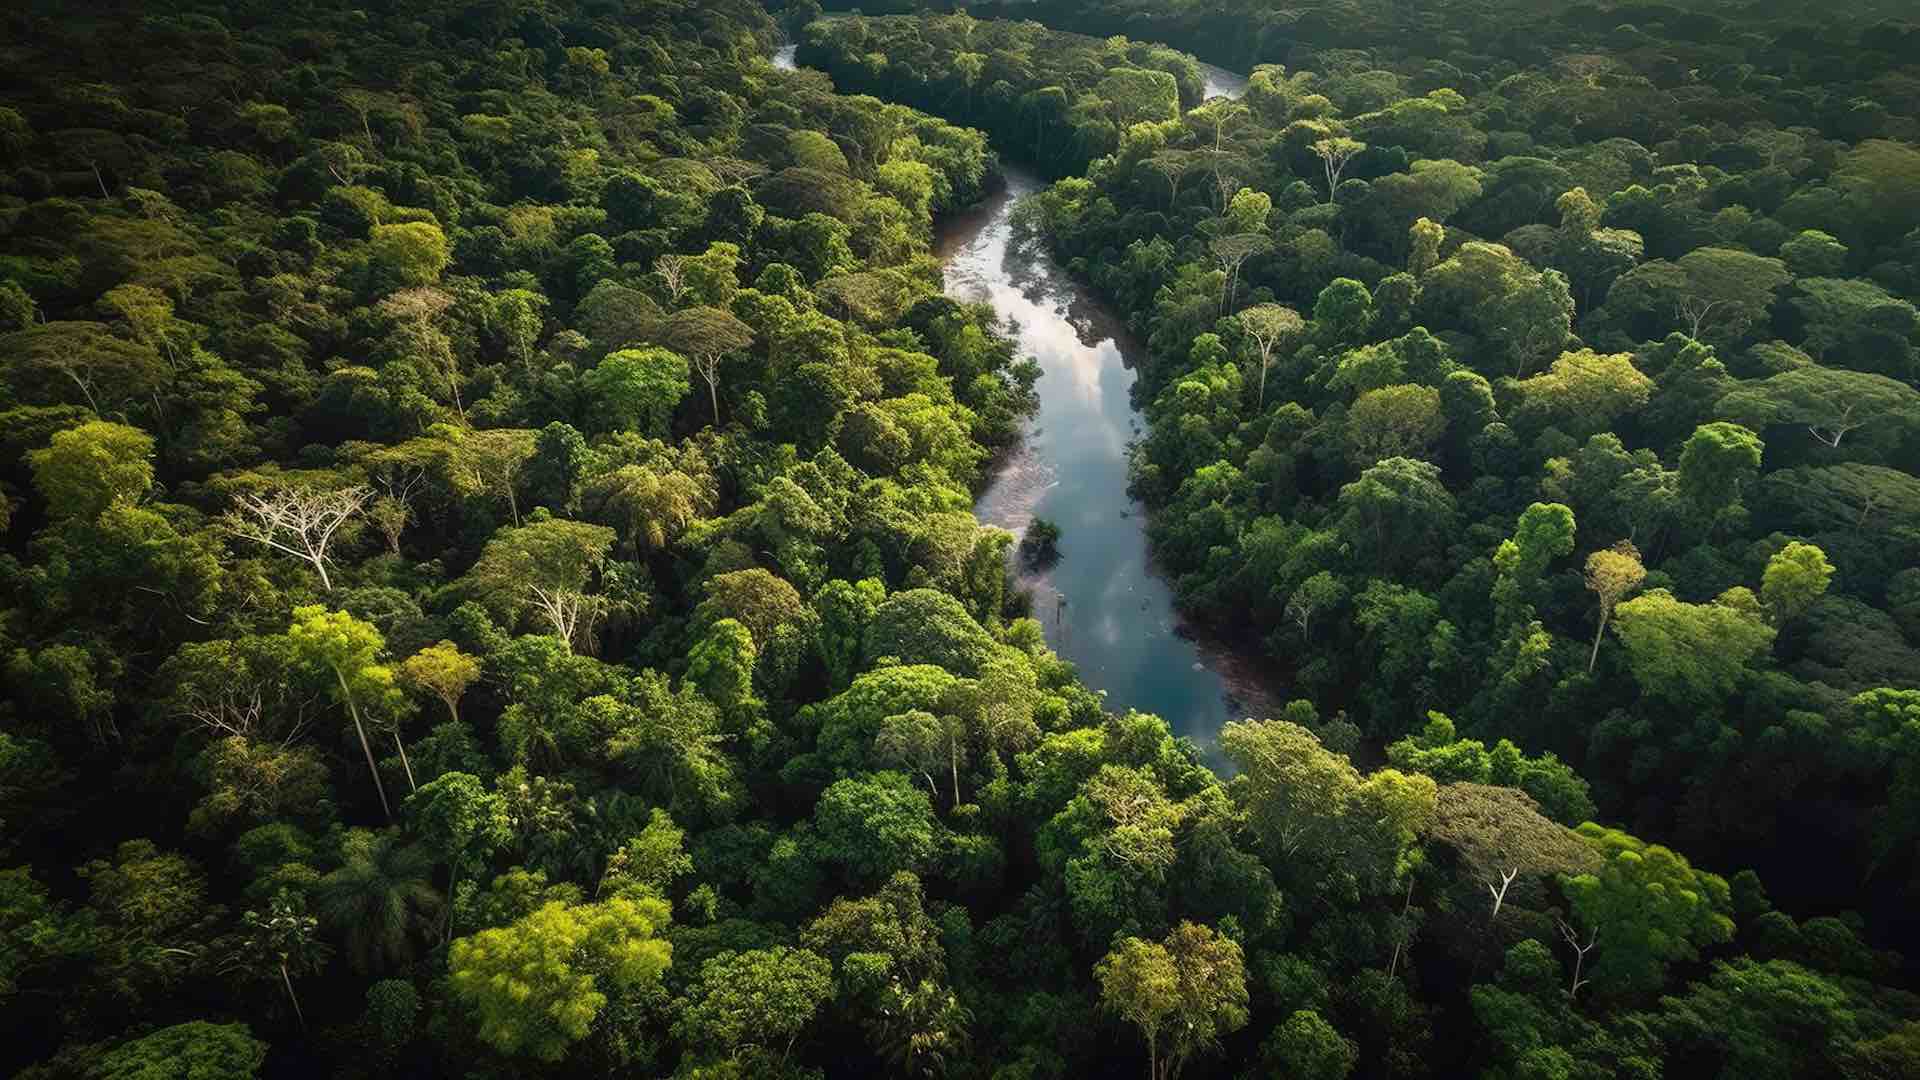 €260 million unified EU fund targets Amazon deforestation crisis